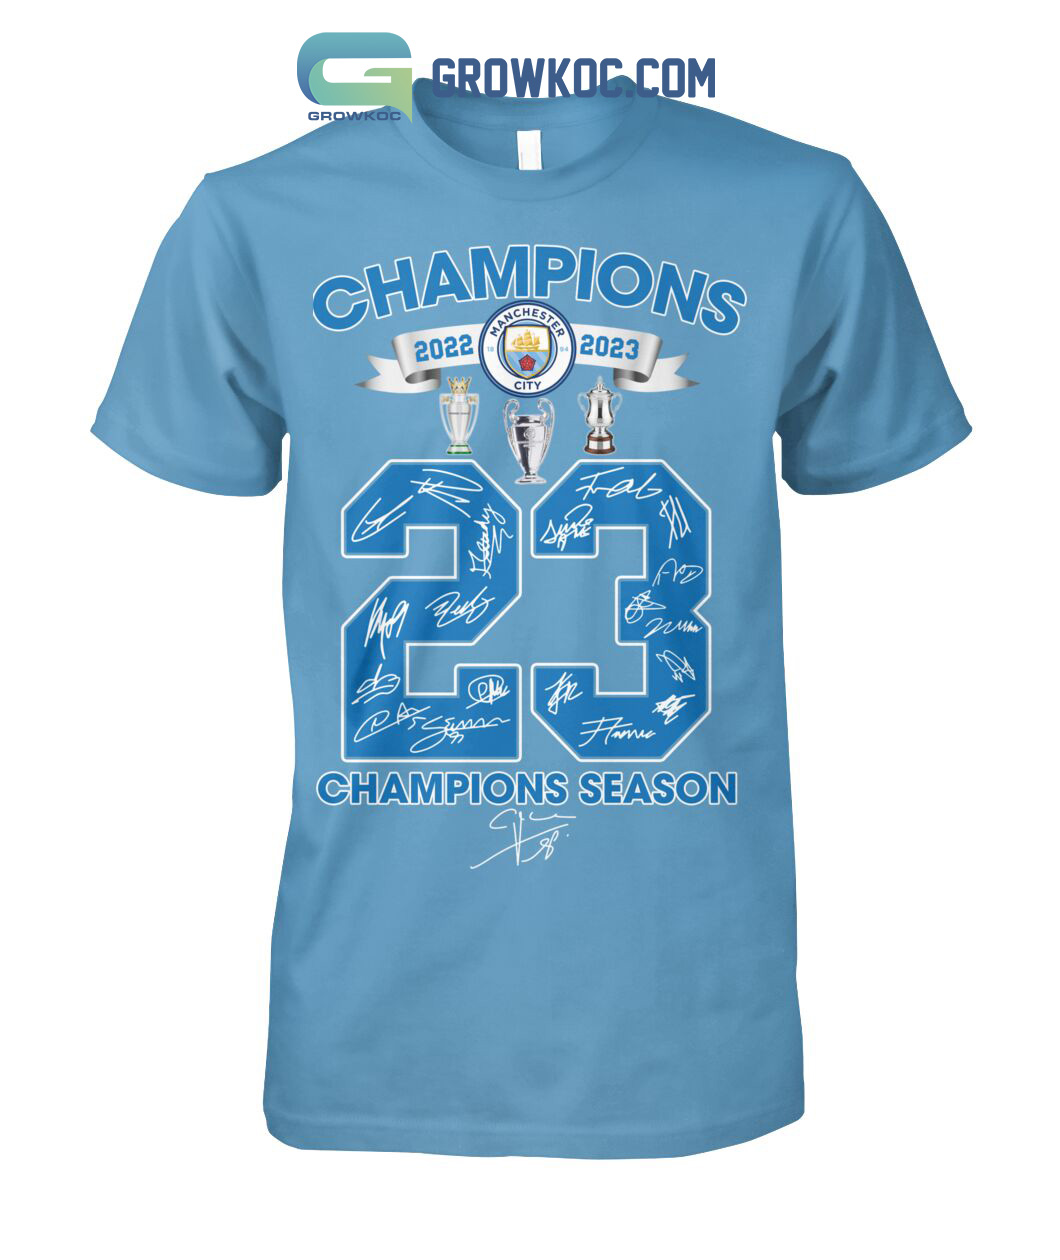 Roberto Firmino Liverpool Fc 2015-2023 Thank You T-Shirt